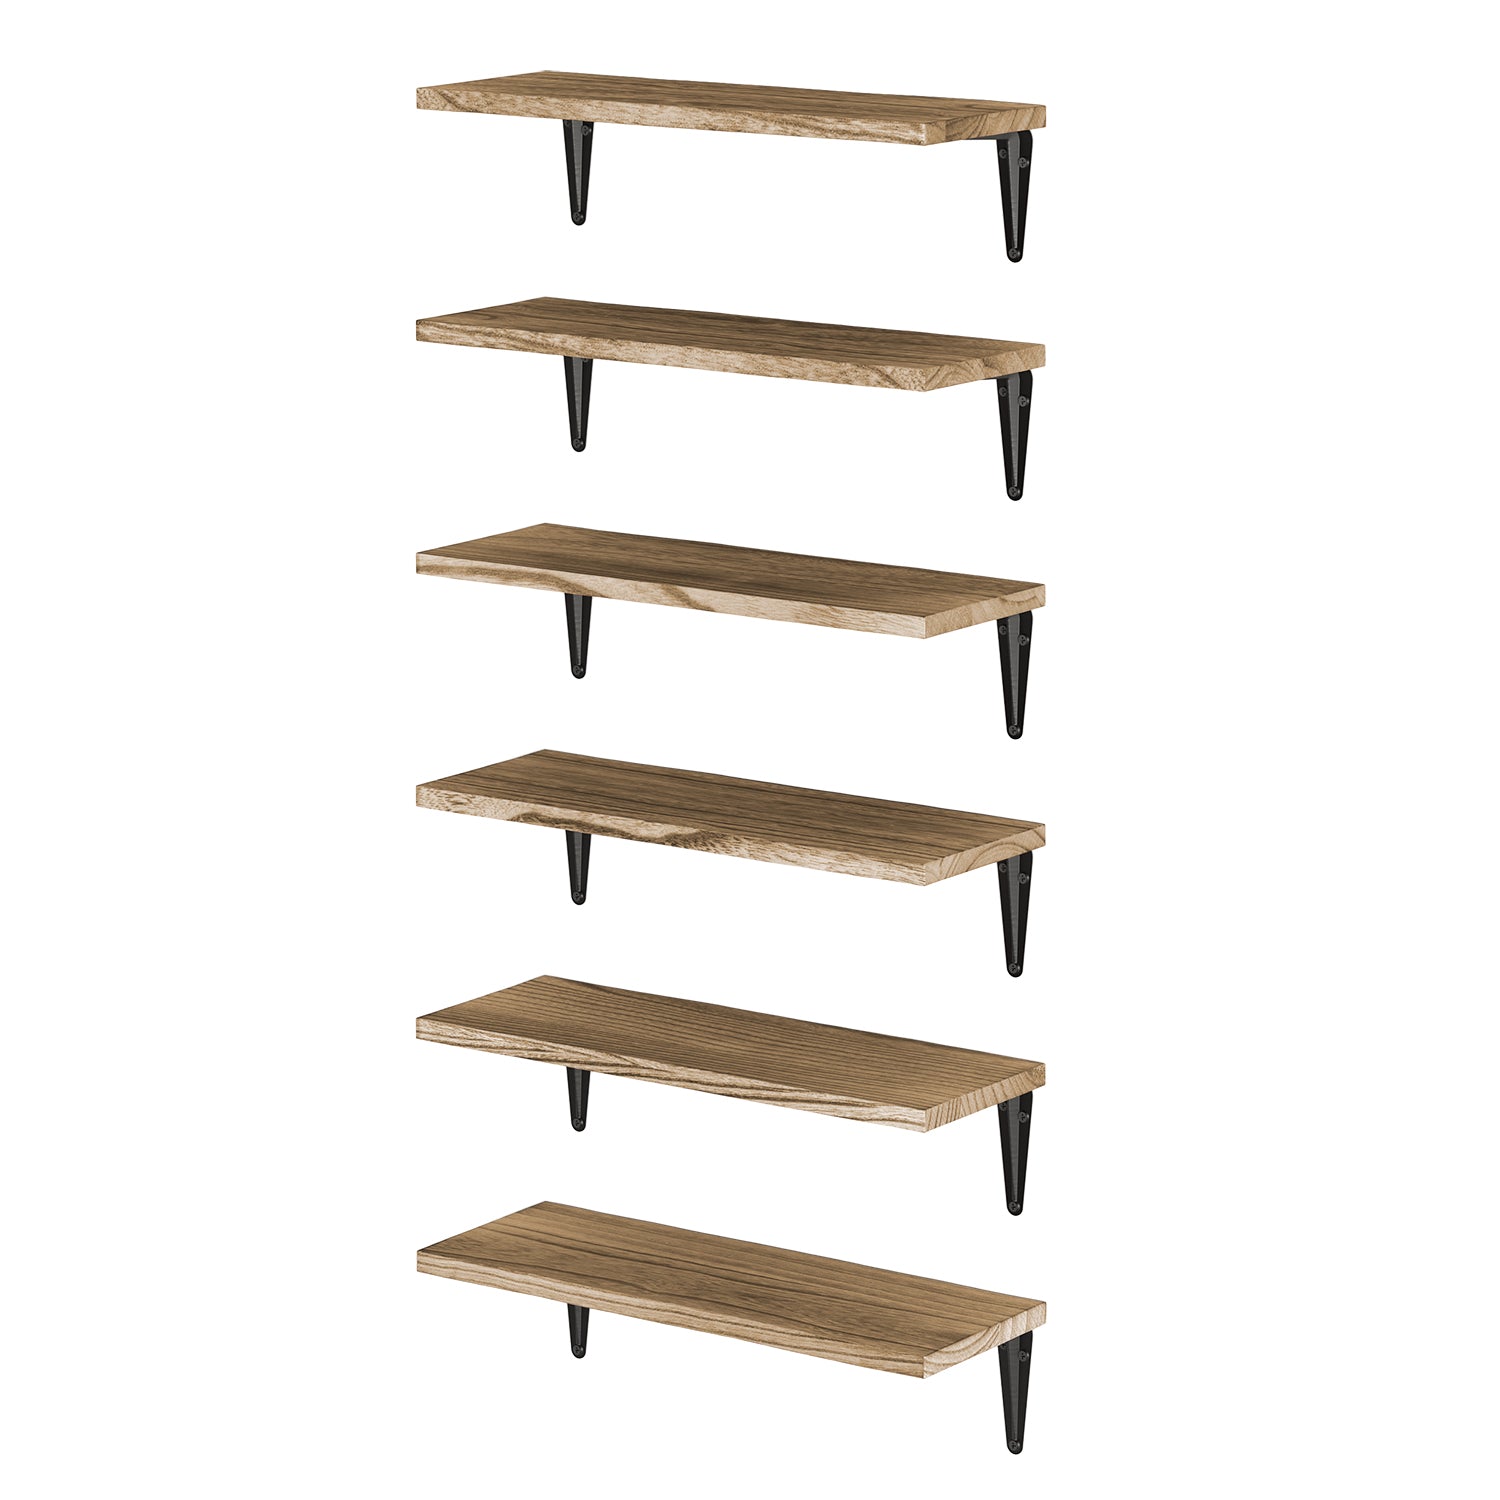 ARRAS 17” Kitchen Floating Shelves and Spice Rack Wall Mount – Set